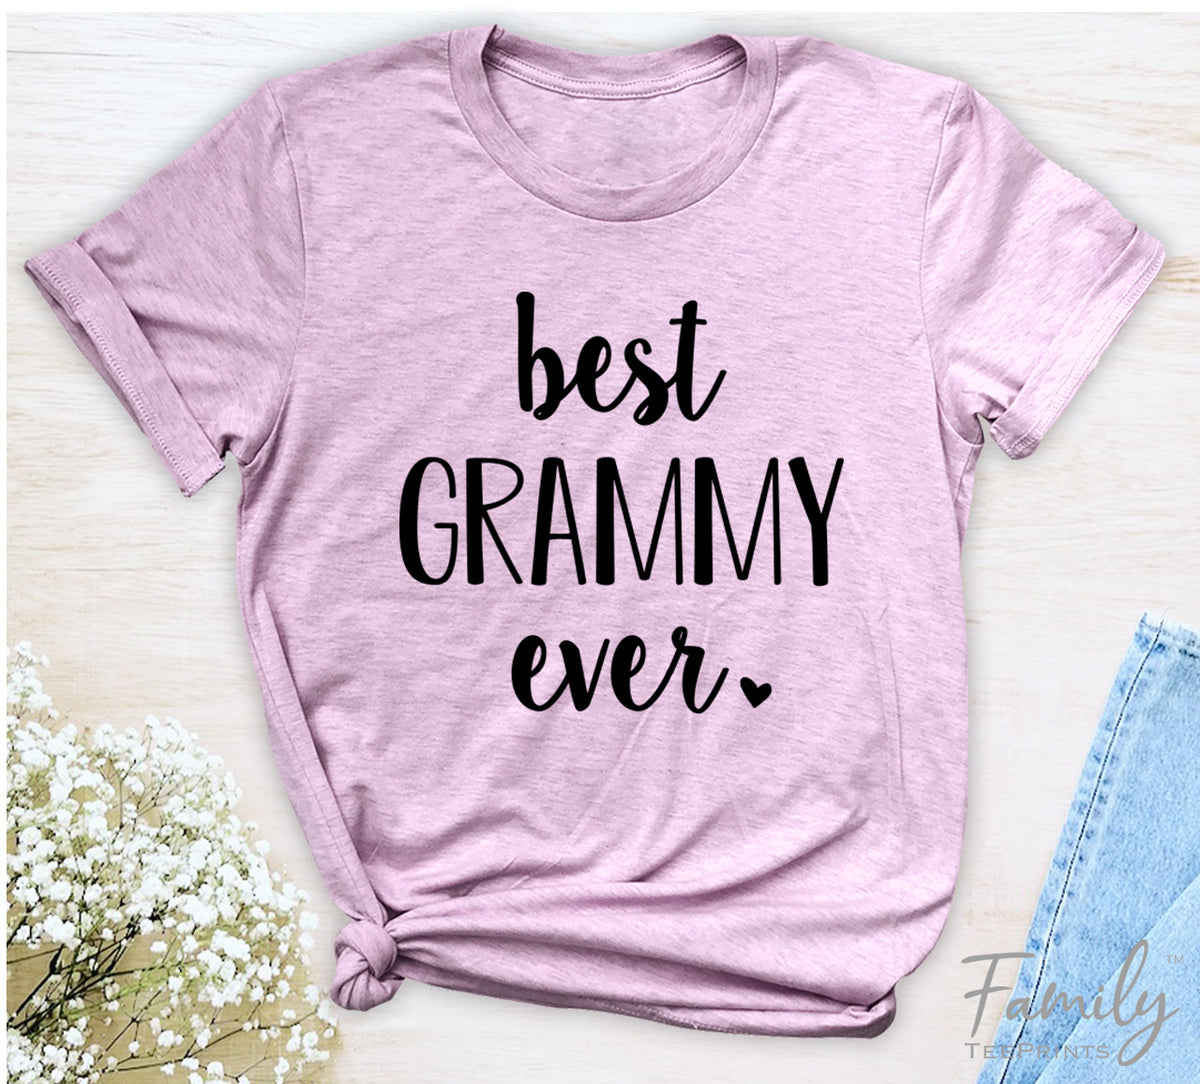 Best Grammy Ever - Unisex T-shirt - Grammy Shirt - Gift For New Grammy